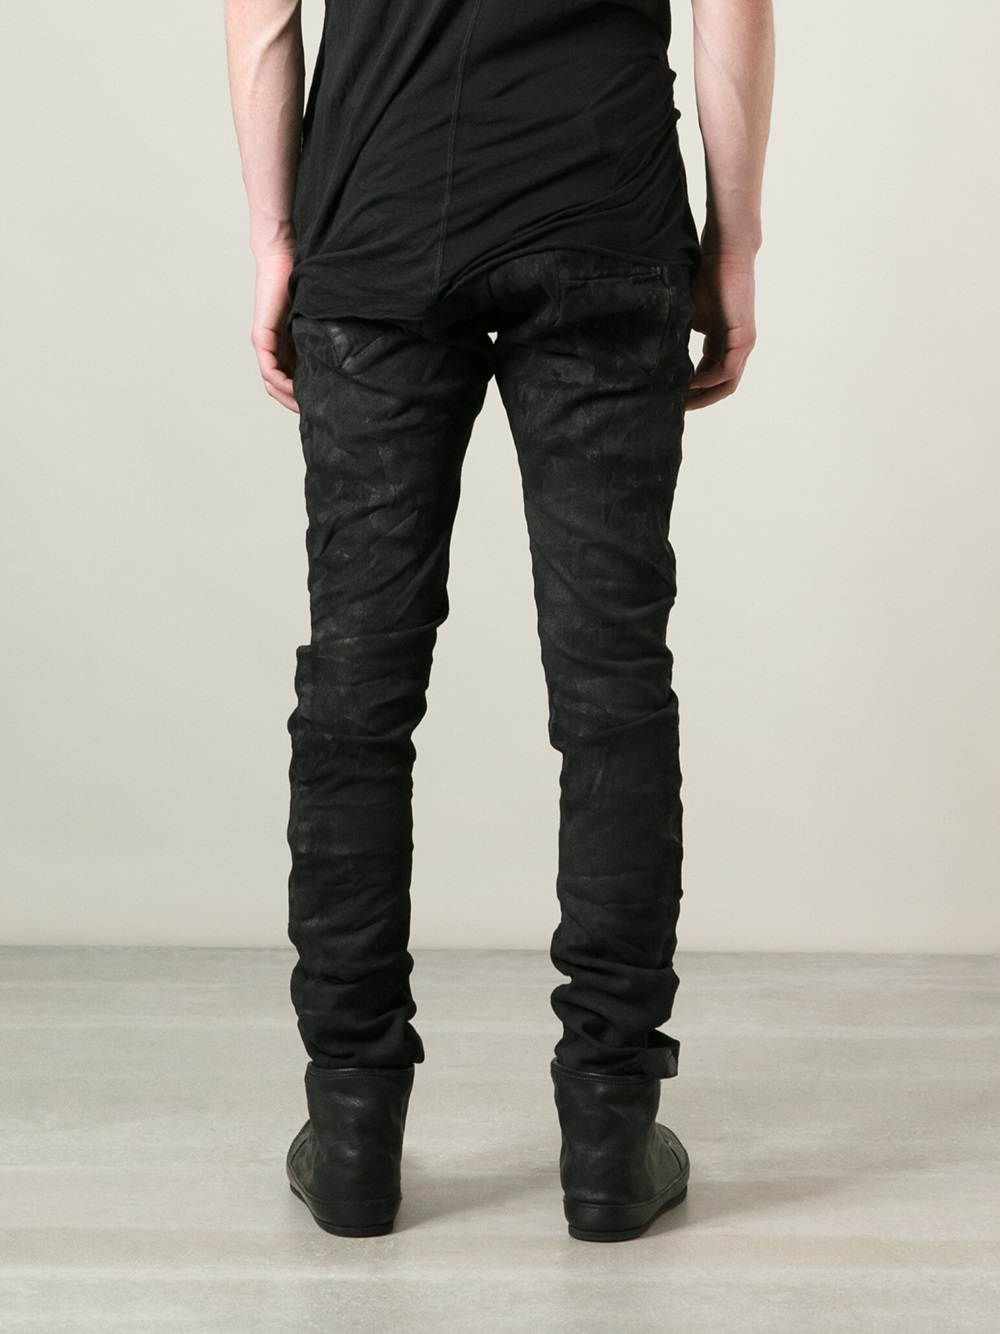 Lyst - Boris Bidjan Saberi Partially Waxed Jeans in Black for Men